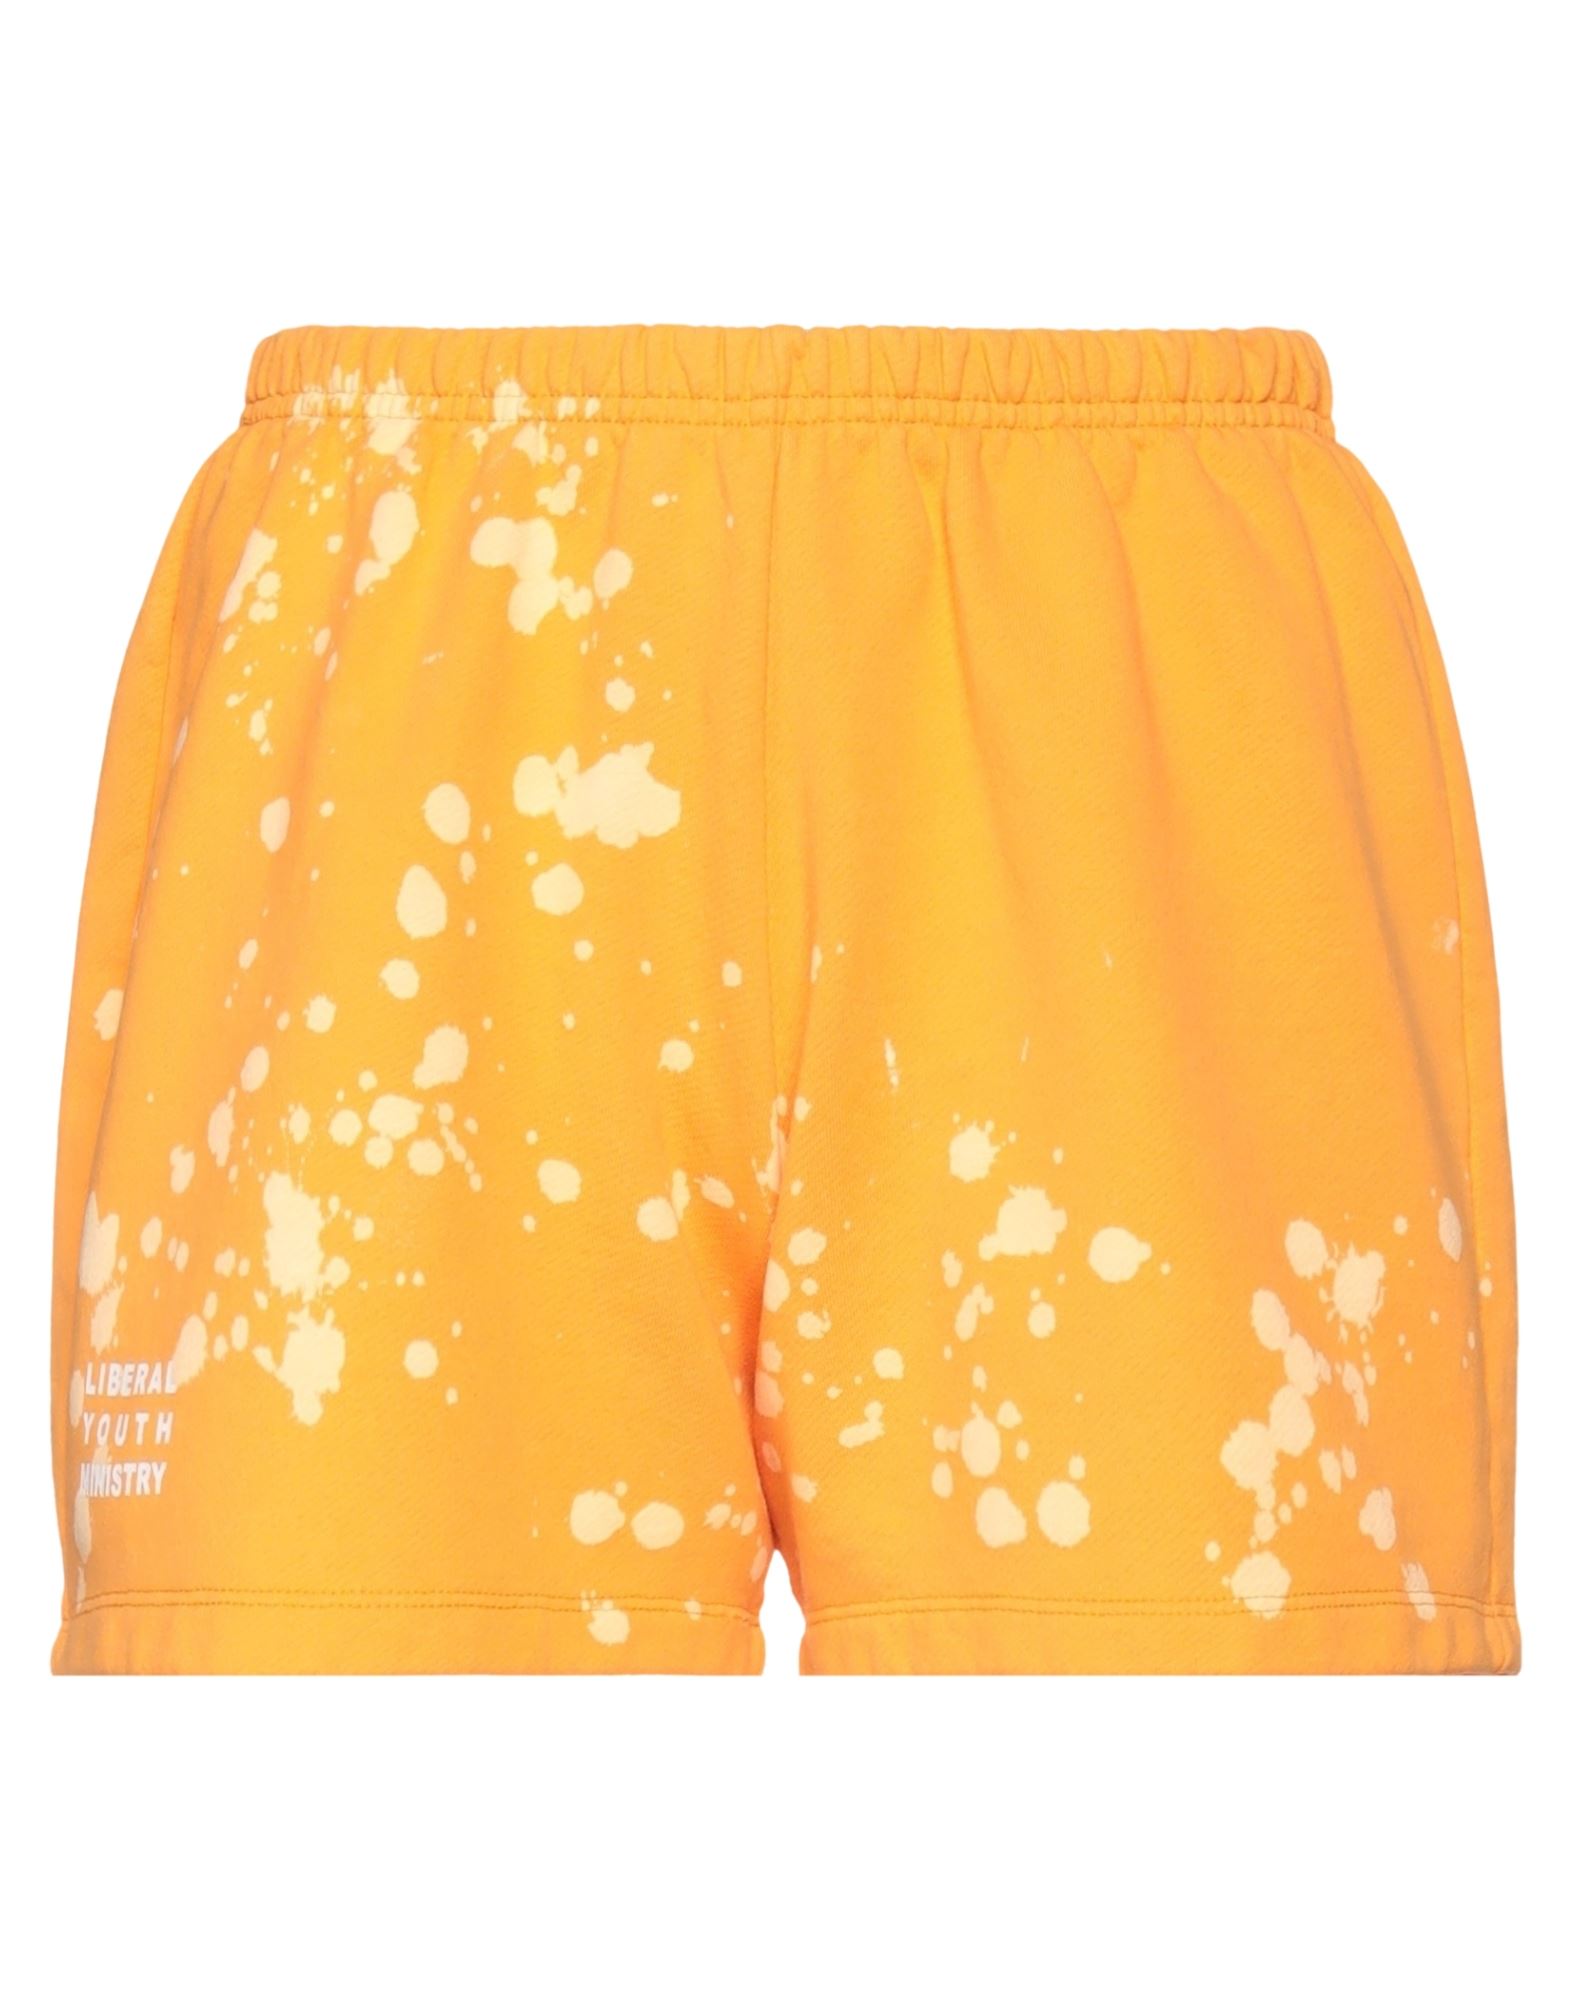 Liberal Youth Ministry Woman Shorts & Bermuda Shorts Orange Size L Cotton